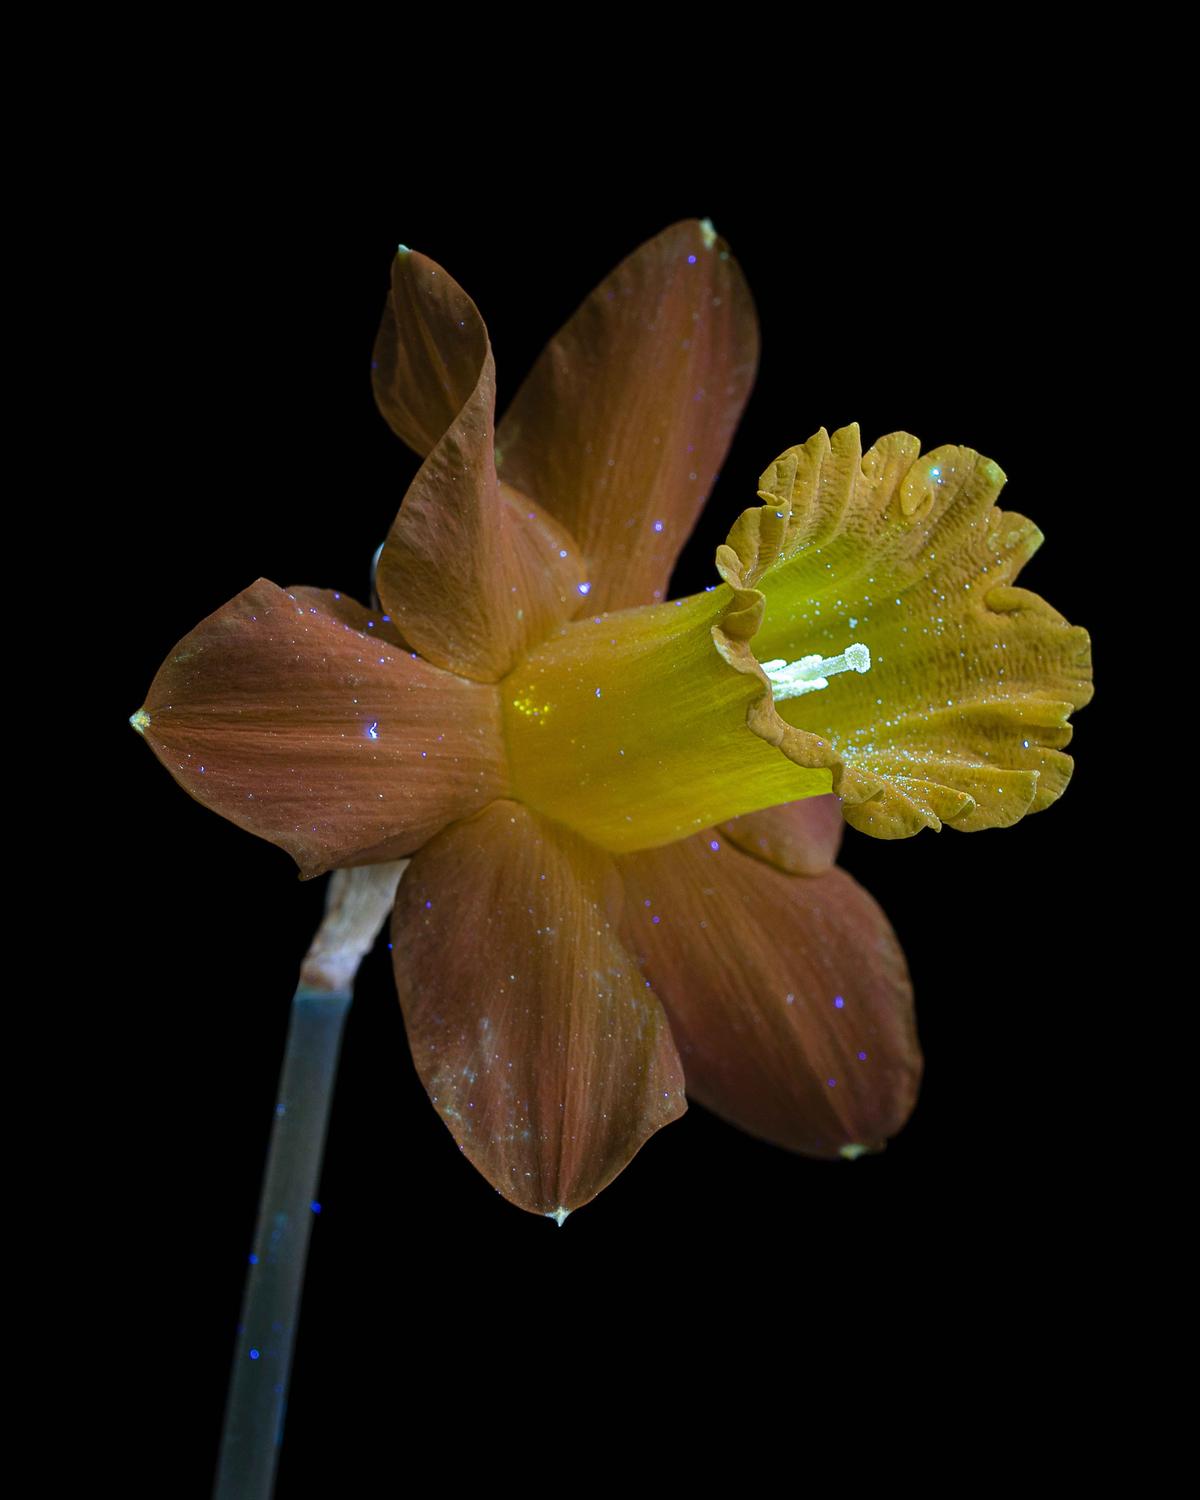 Narcissus. (Courtesy of <a href="https://www.instagram.com/bibadesign_uvivf/">Debora Lombardi</a> and <a href="https://www.bibadesign.it">Bibadesign</a>)